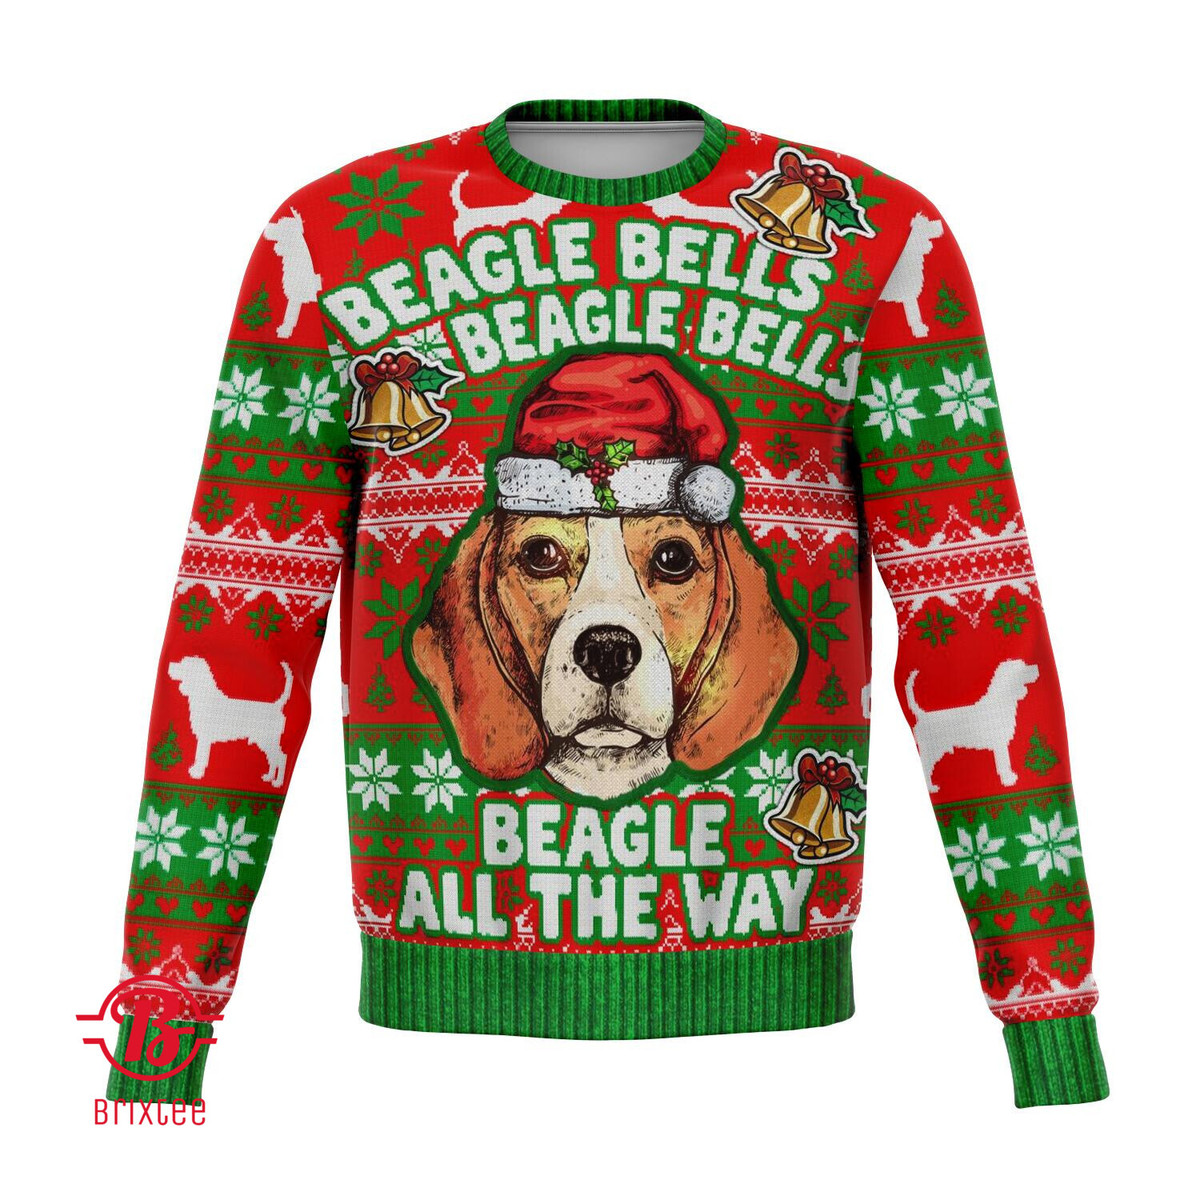 Beagle Bells Beagle All The Way